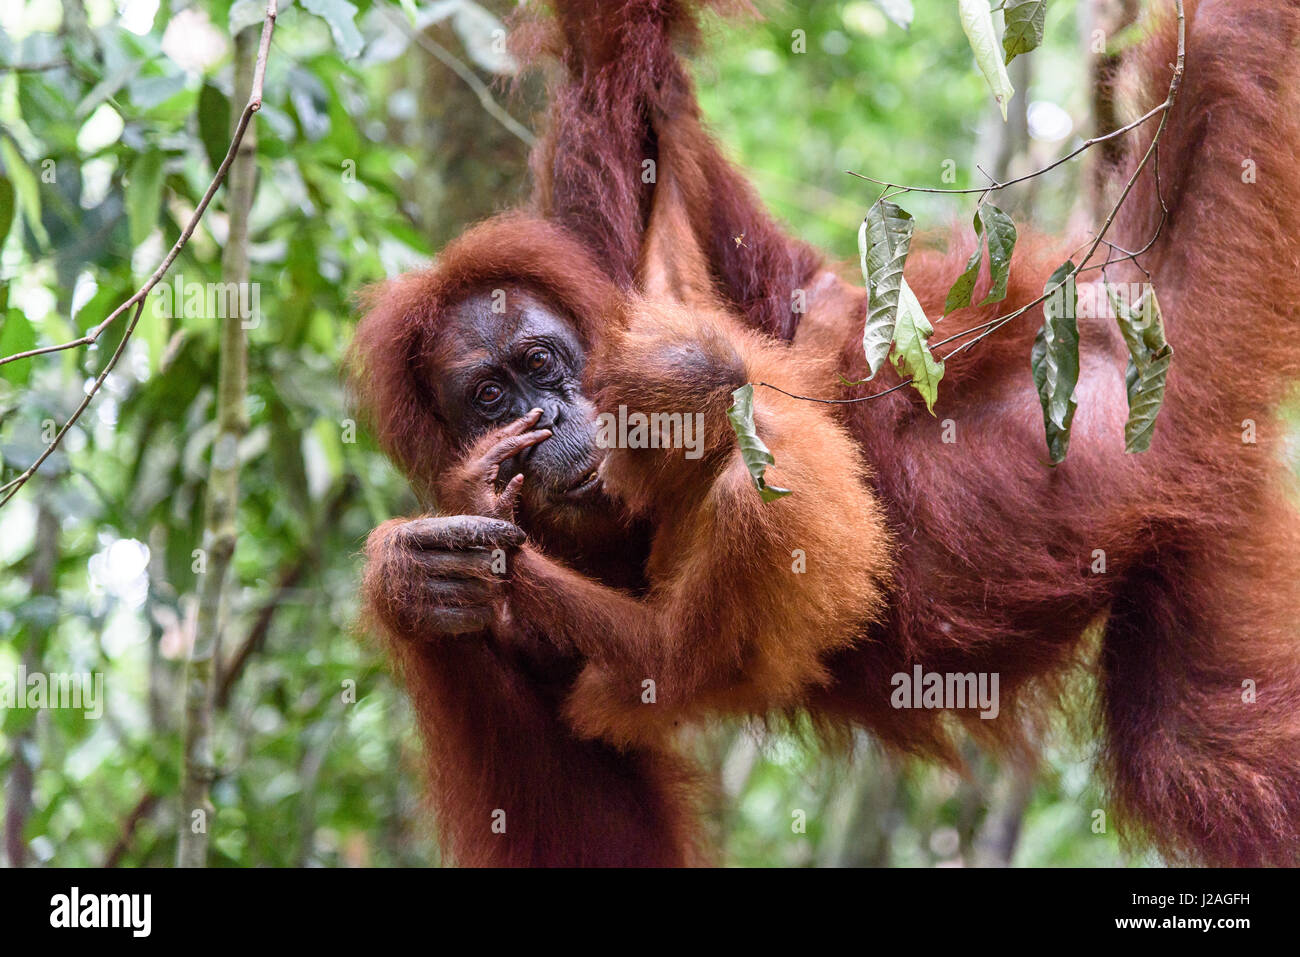 Indonesia, Aceh, Gayo Lues Regency, Gunung-Leuser National Park, Sumatra, Orangutan family in the wild Stock Photo